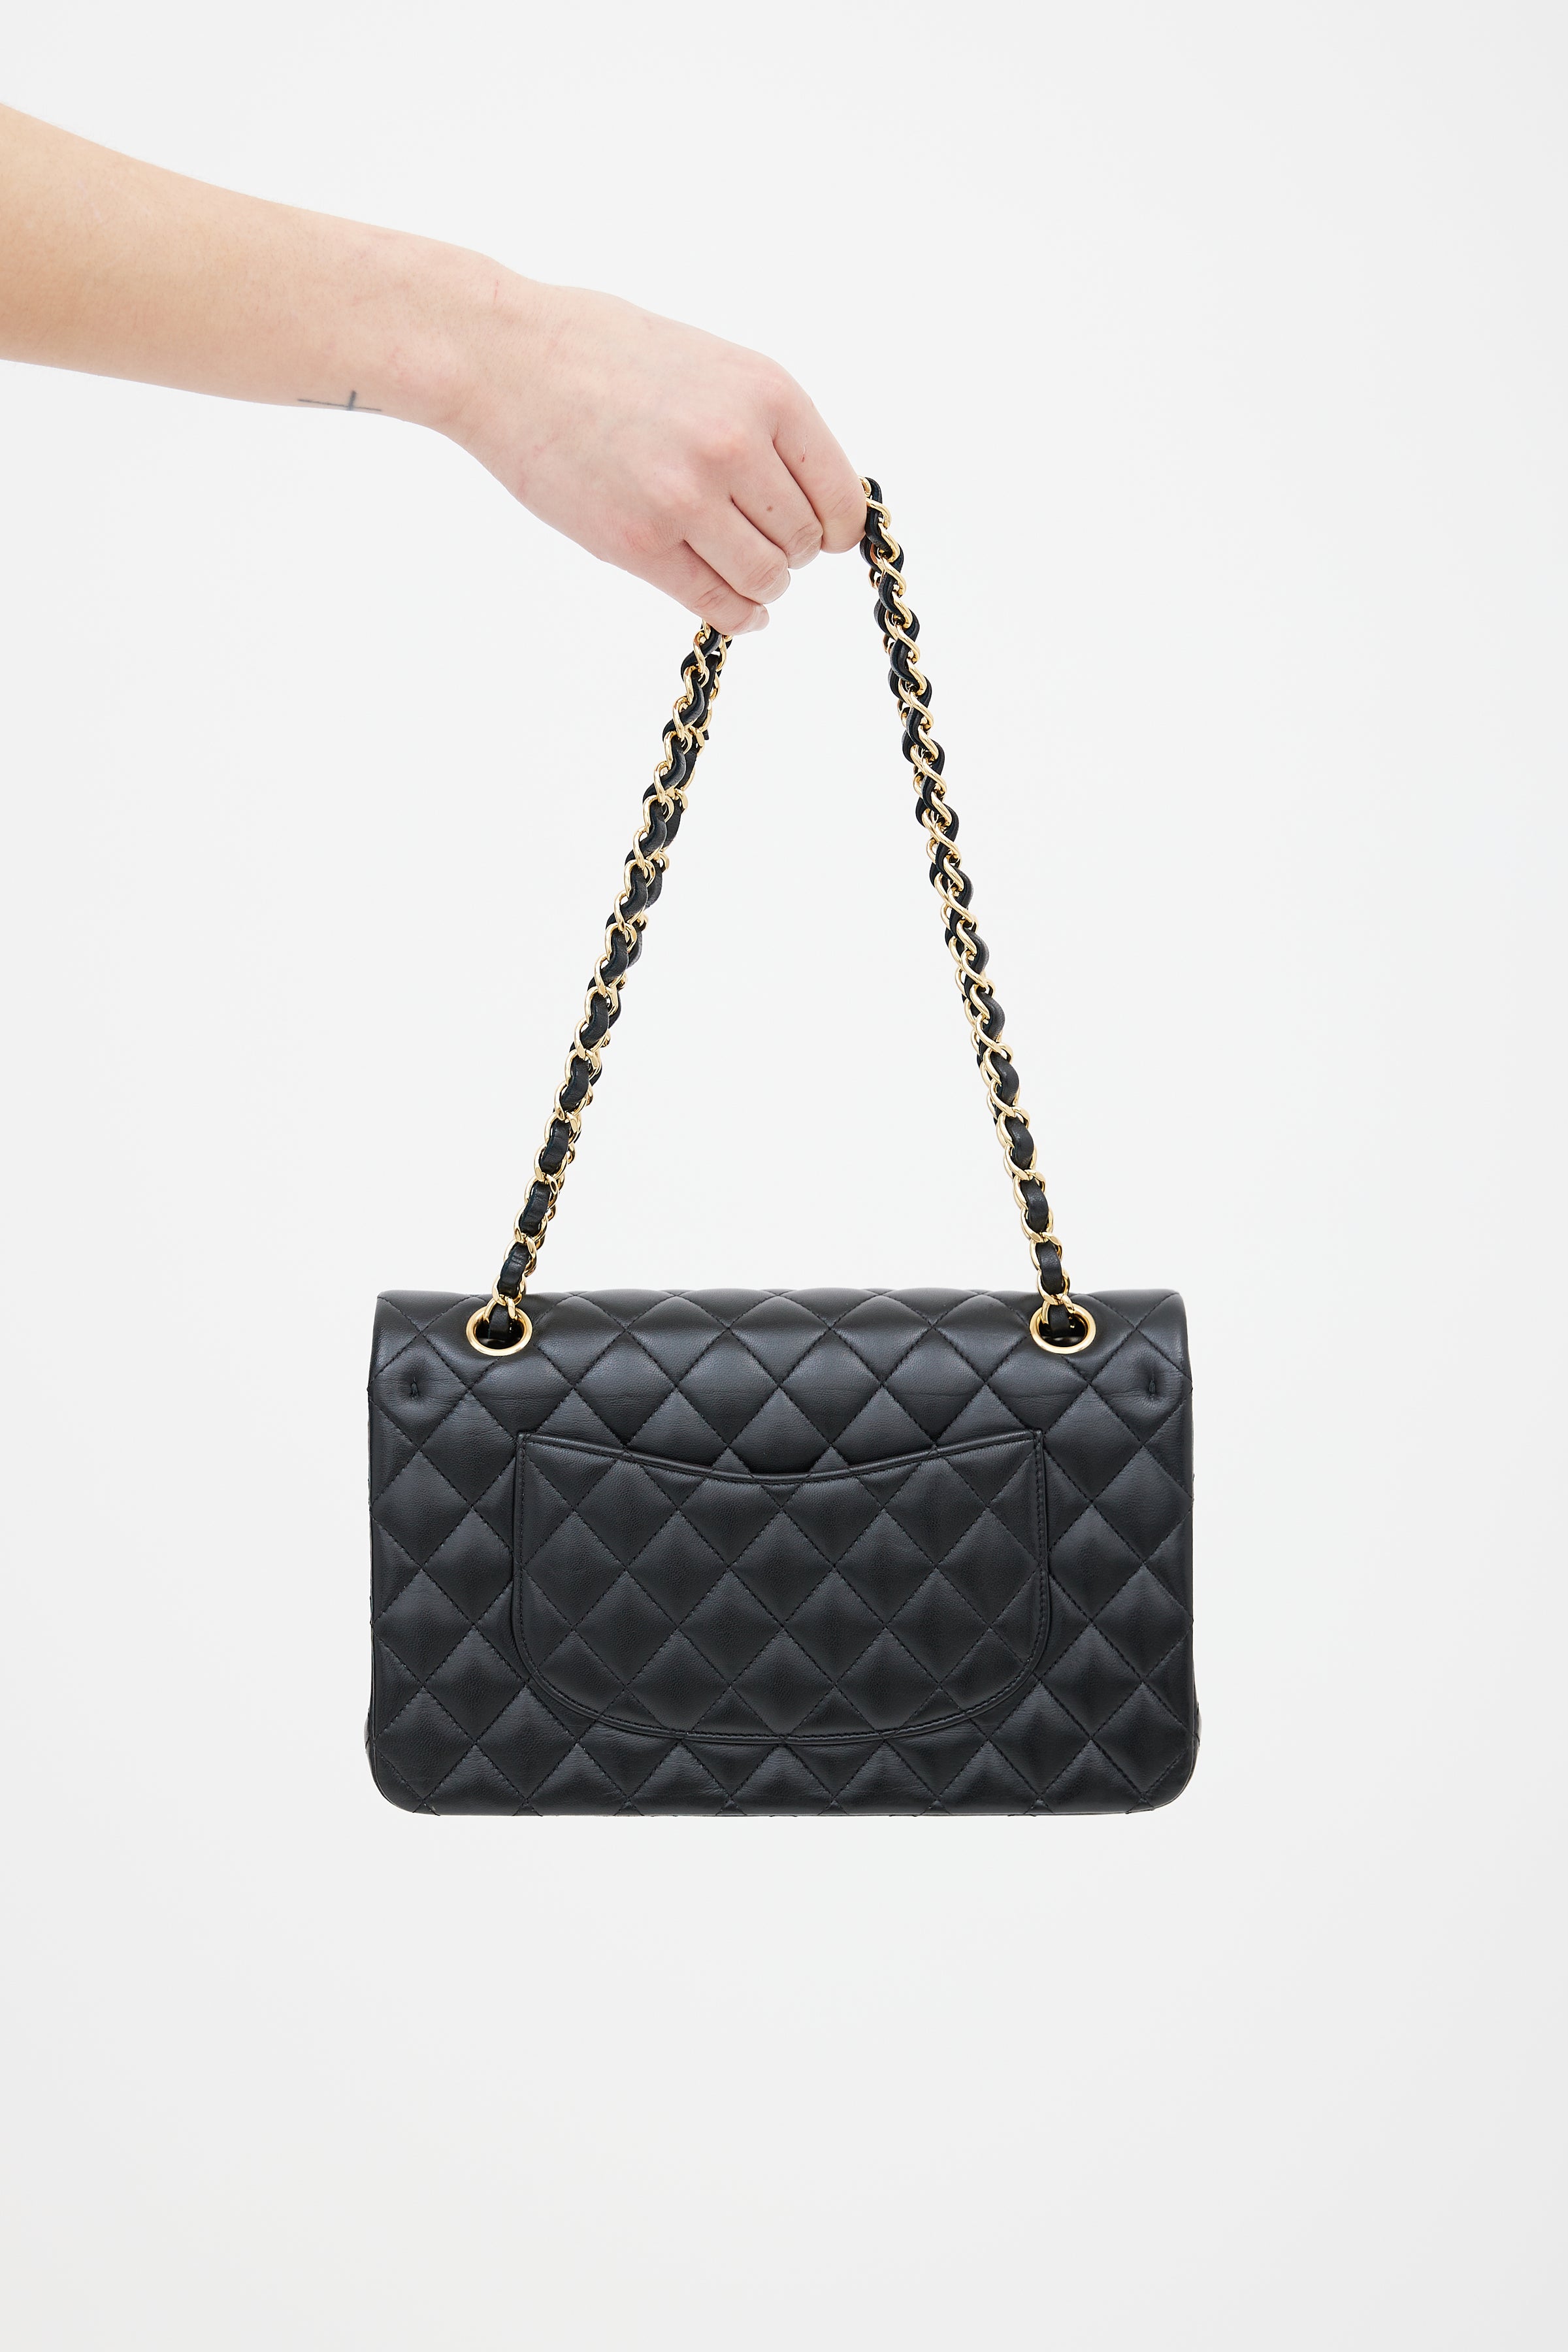 Chanel Pink/Black Knit Pattern Double Flap Handbag – Vintage by Misty